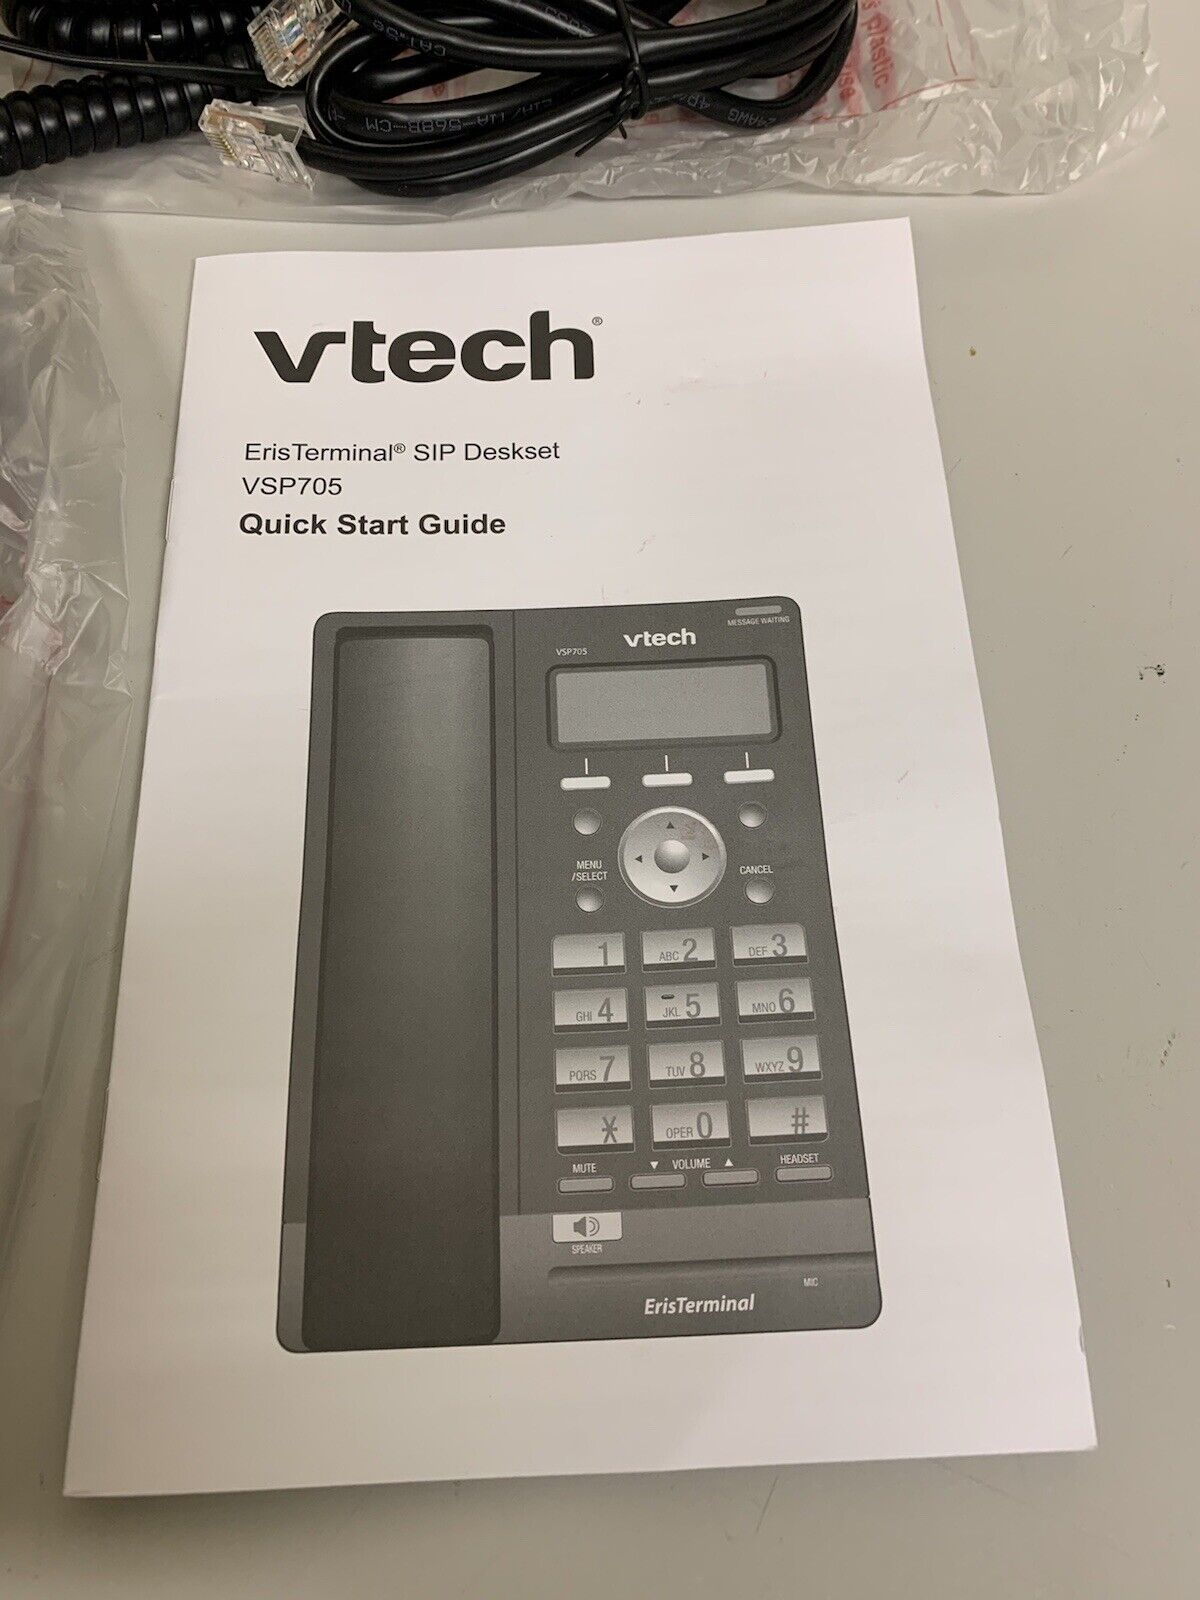 Vtech VSP705 ErisTerminal Deskset